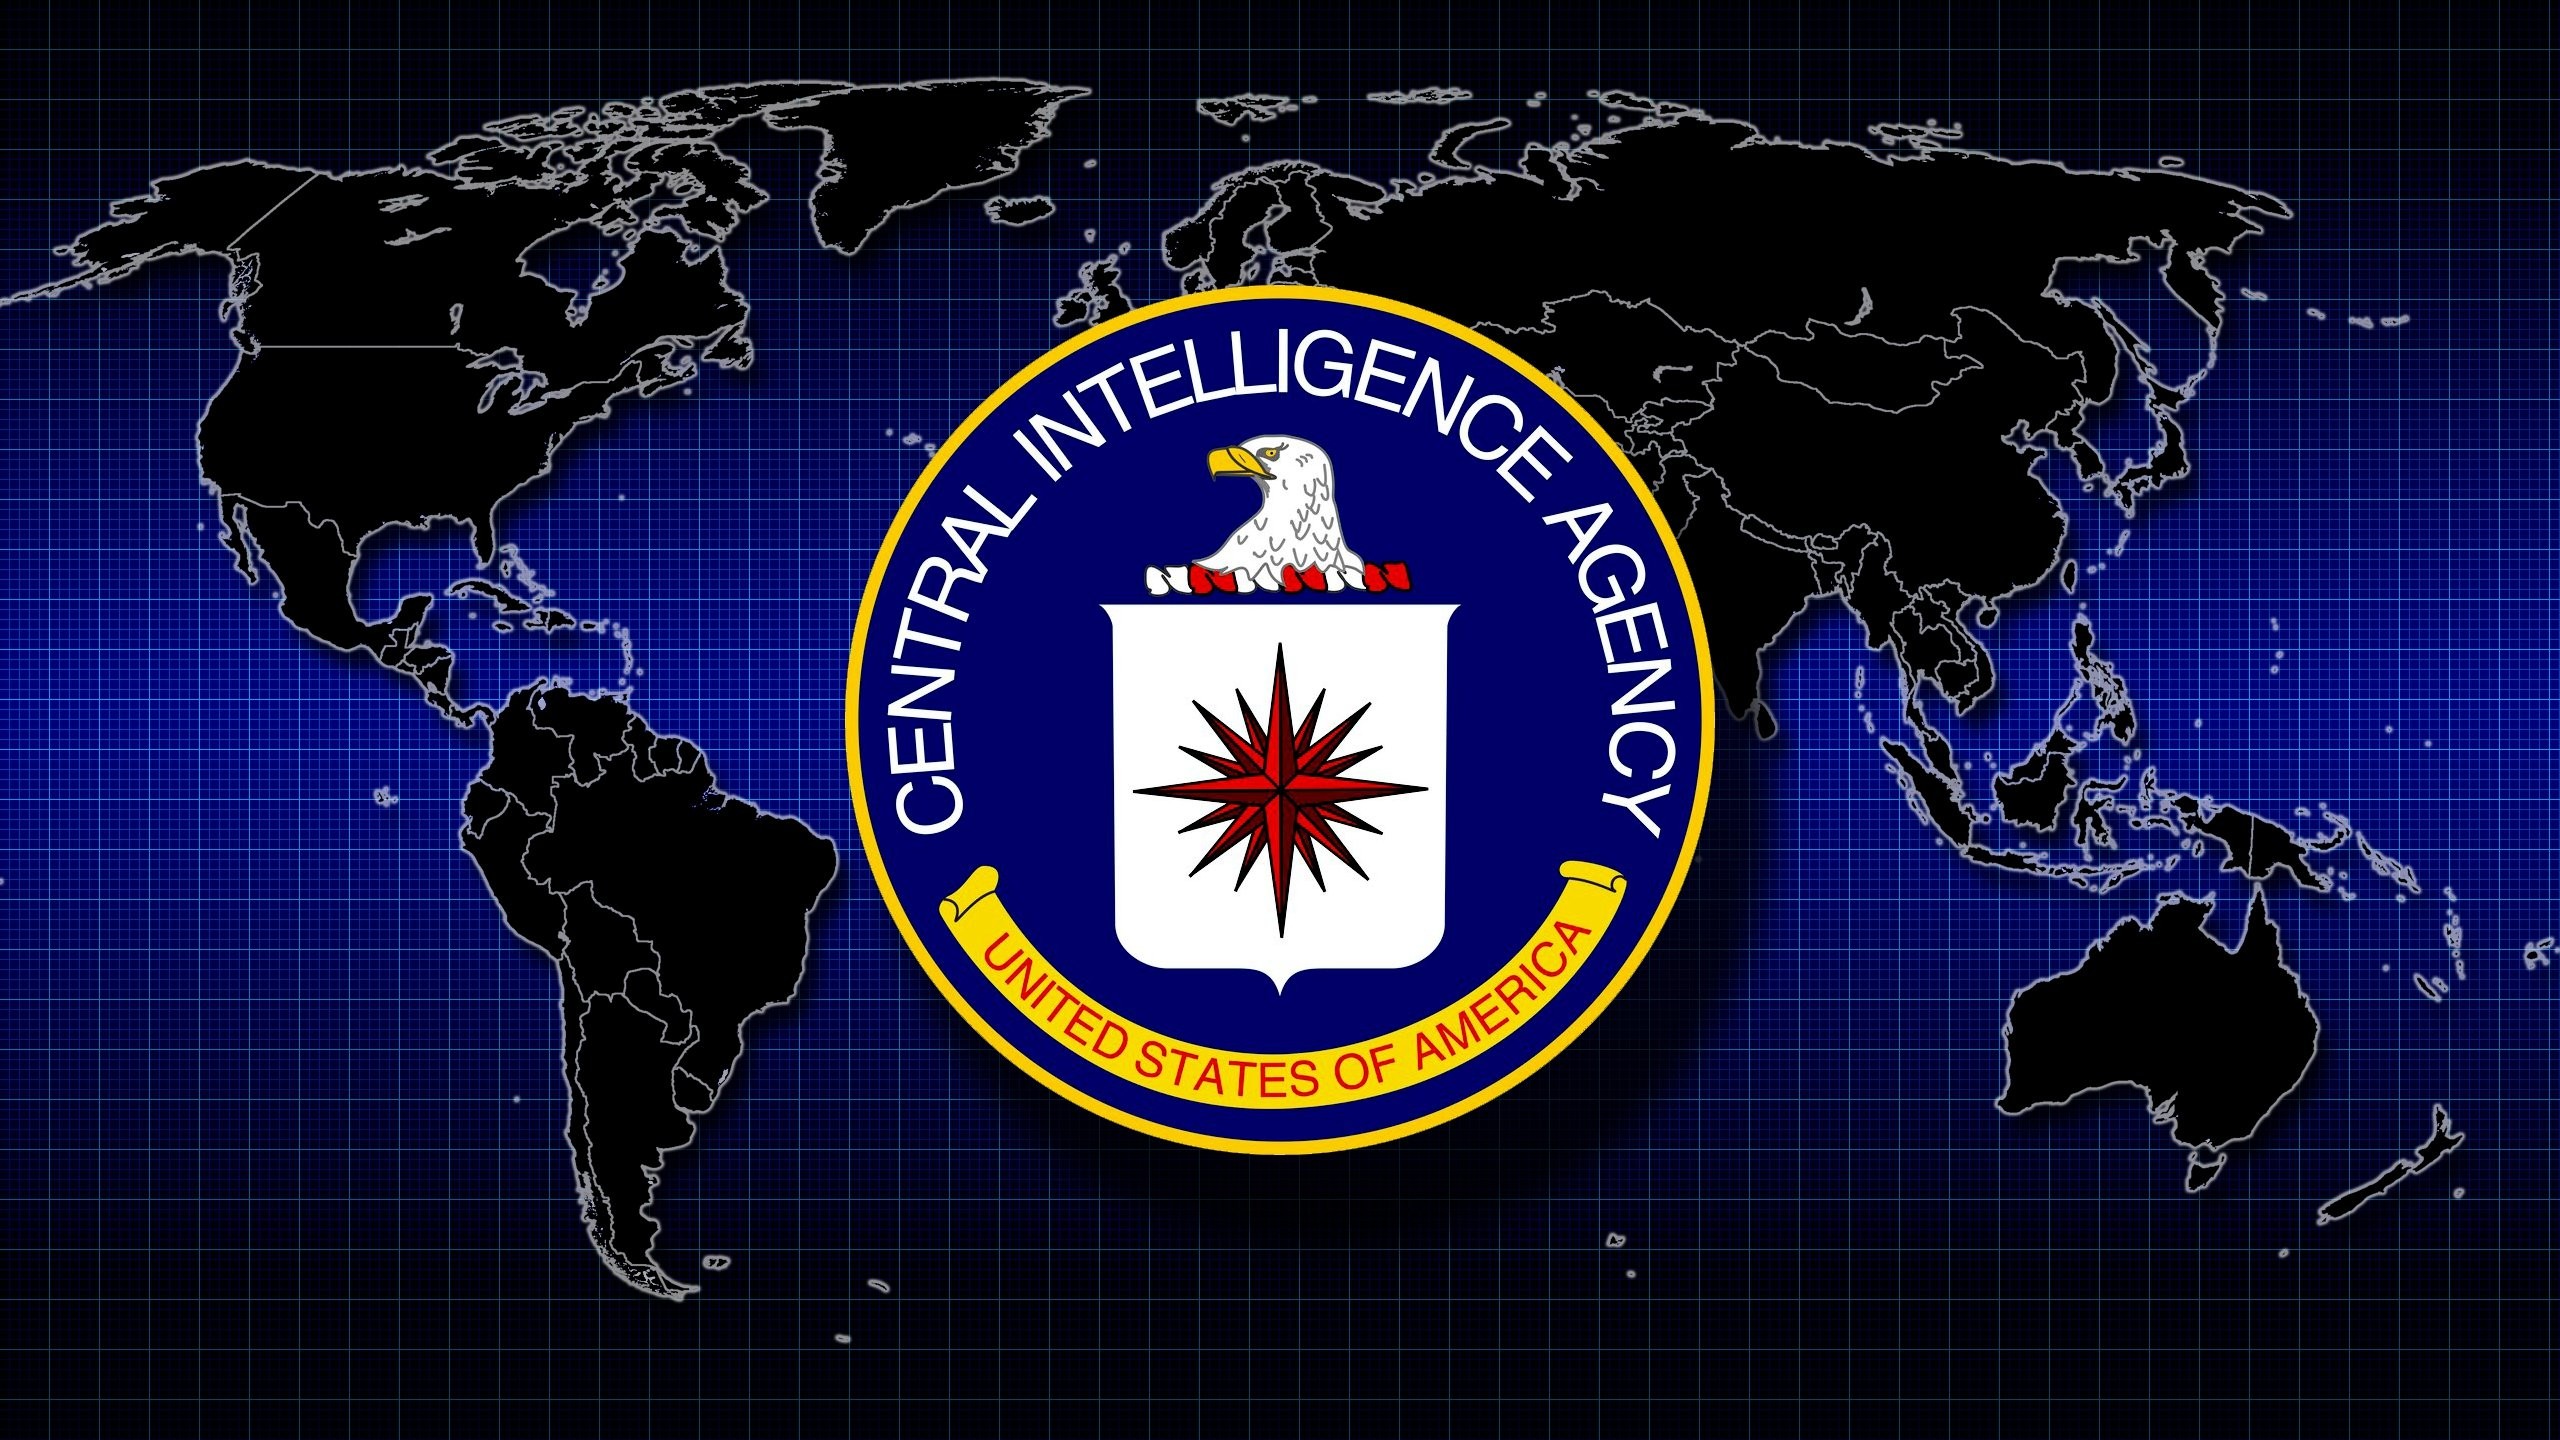 CIA Central Intelligence Agency crime usa america spy logo wallpaper 421689 WallpaperUP